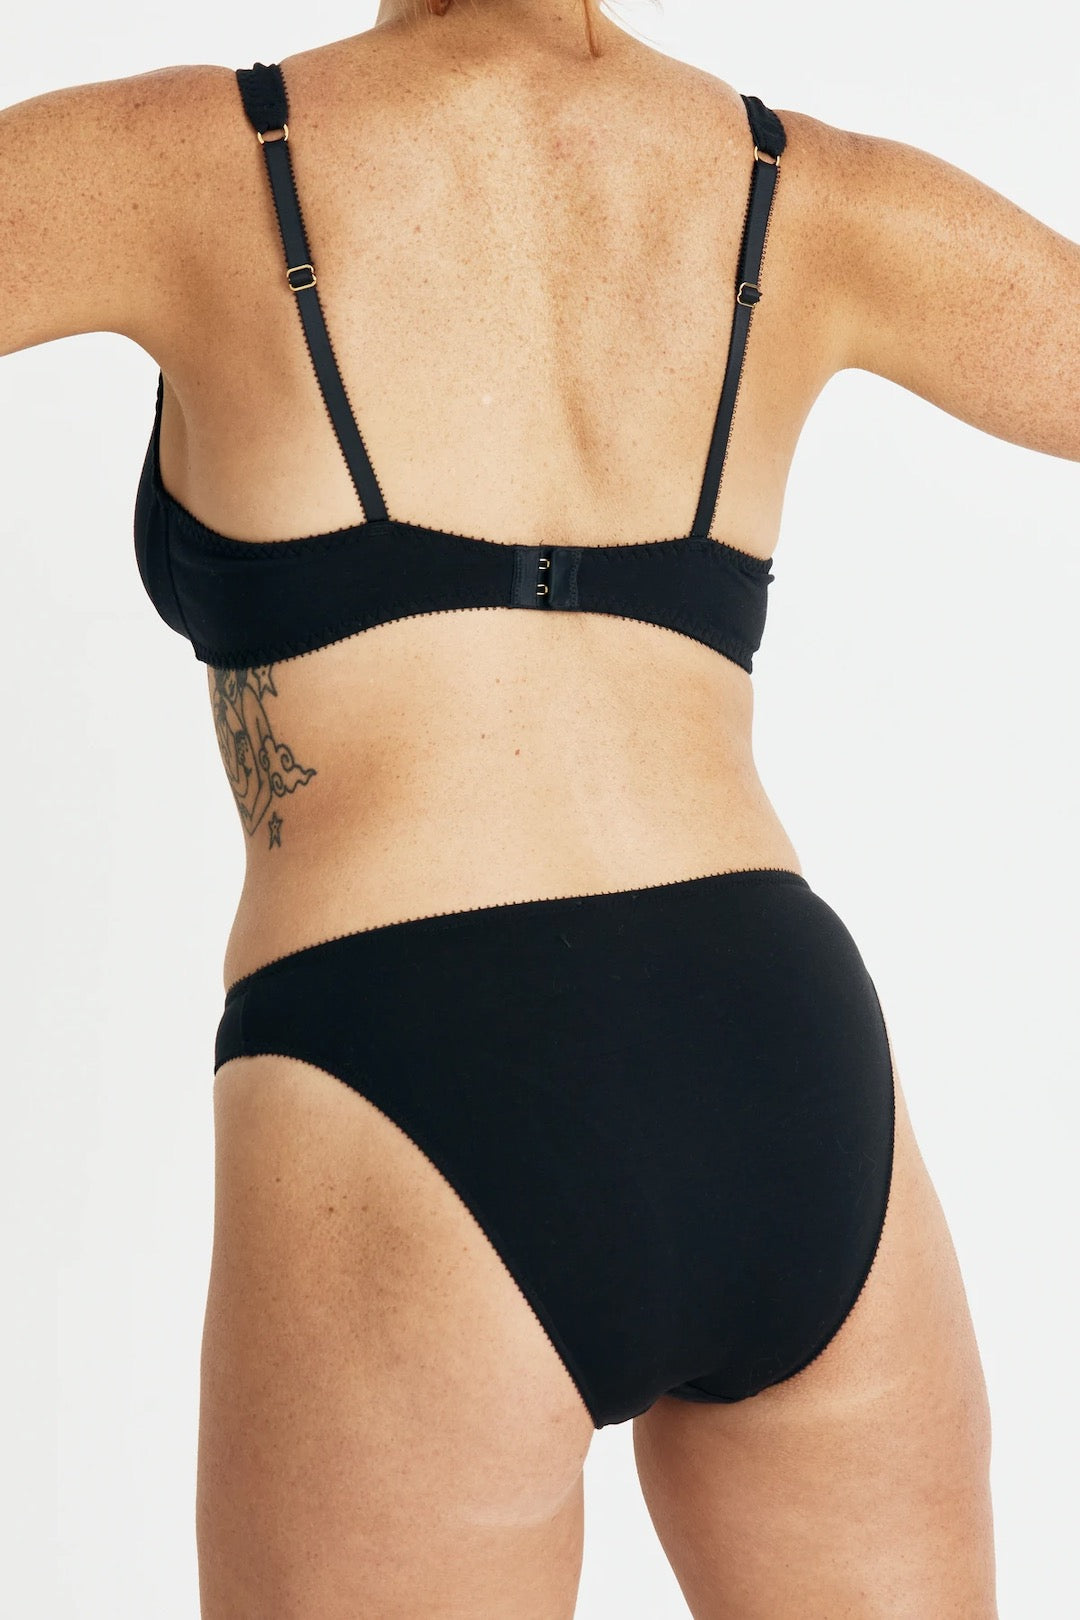 The back view of a woman wearing a Videris Sarah Bra – Shield bikini.